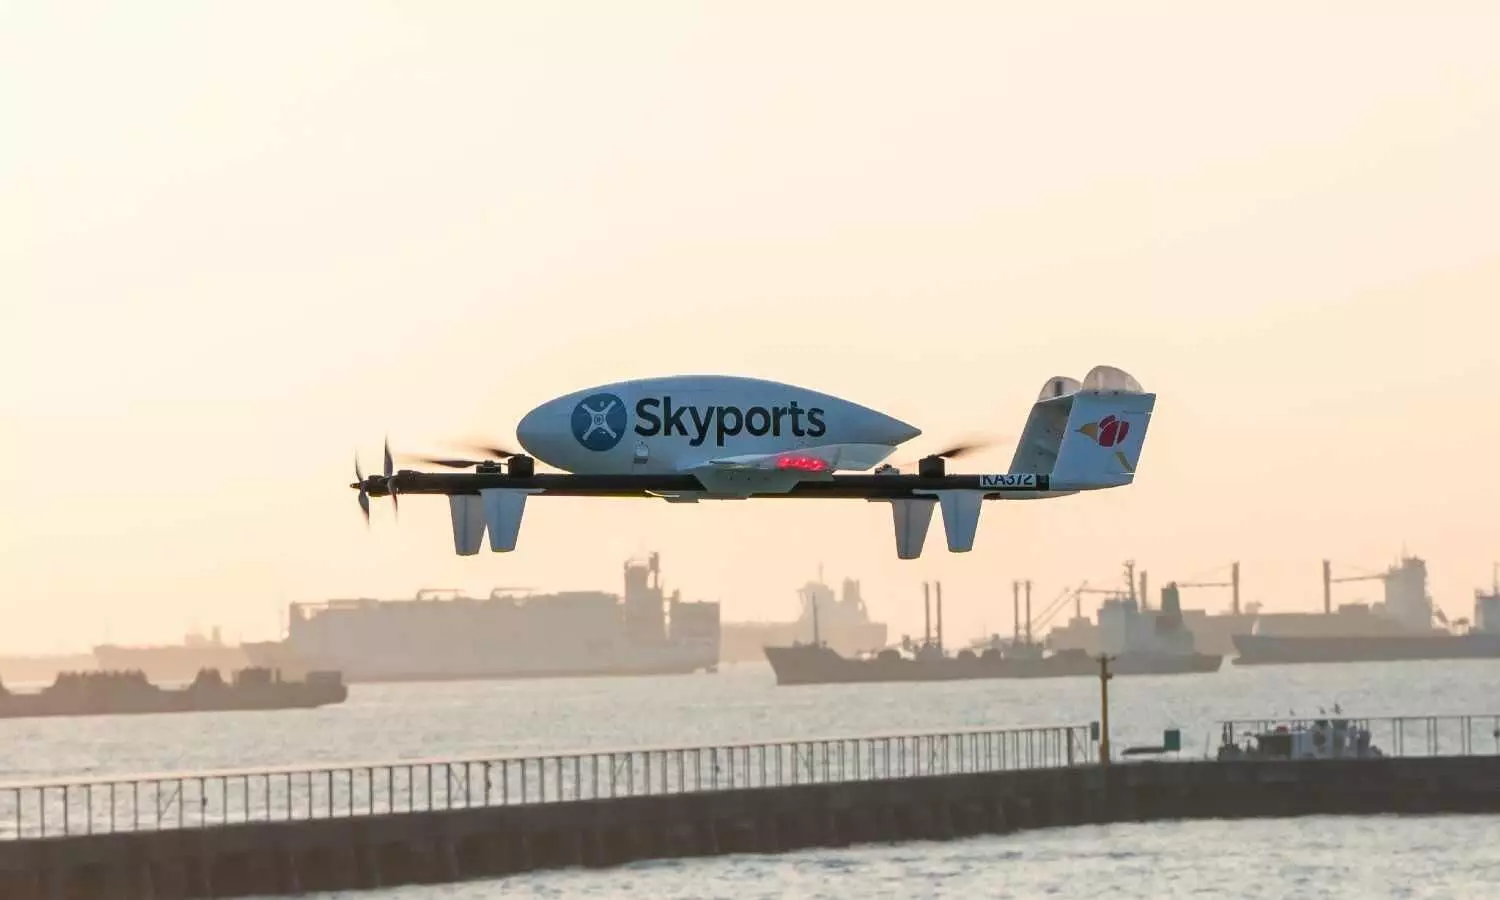 Skyports raises $23 million in Series B funding